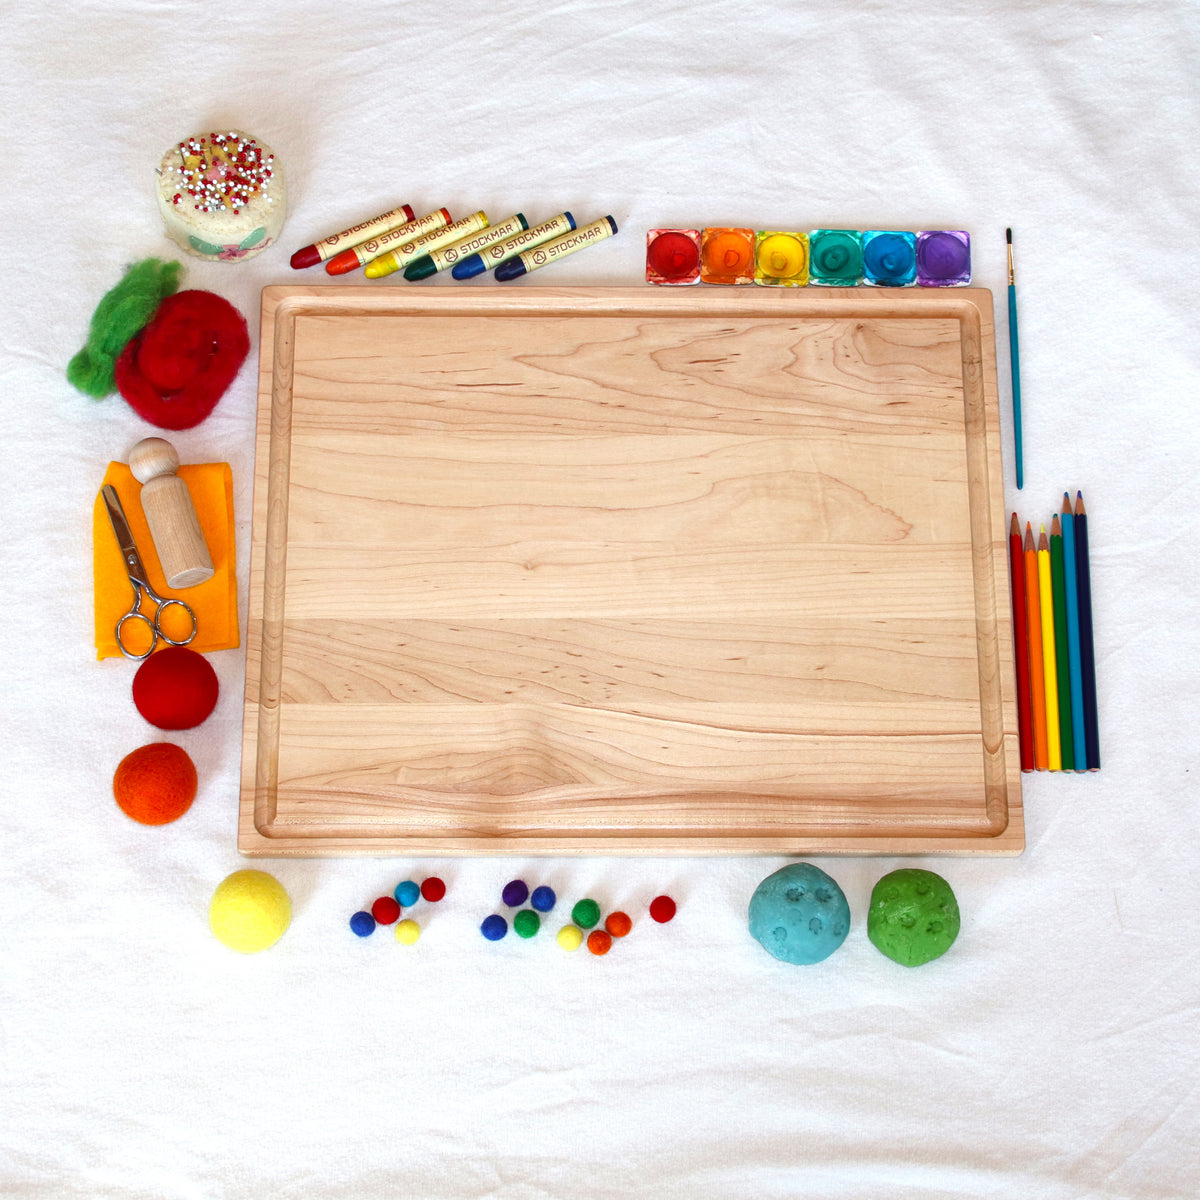 The Life of Jennifer Dawn: Easy Craft for Kids: Create Treasure Jewel  Magnets